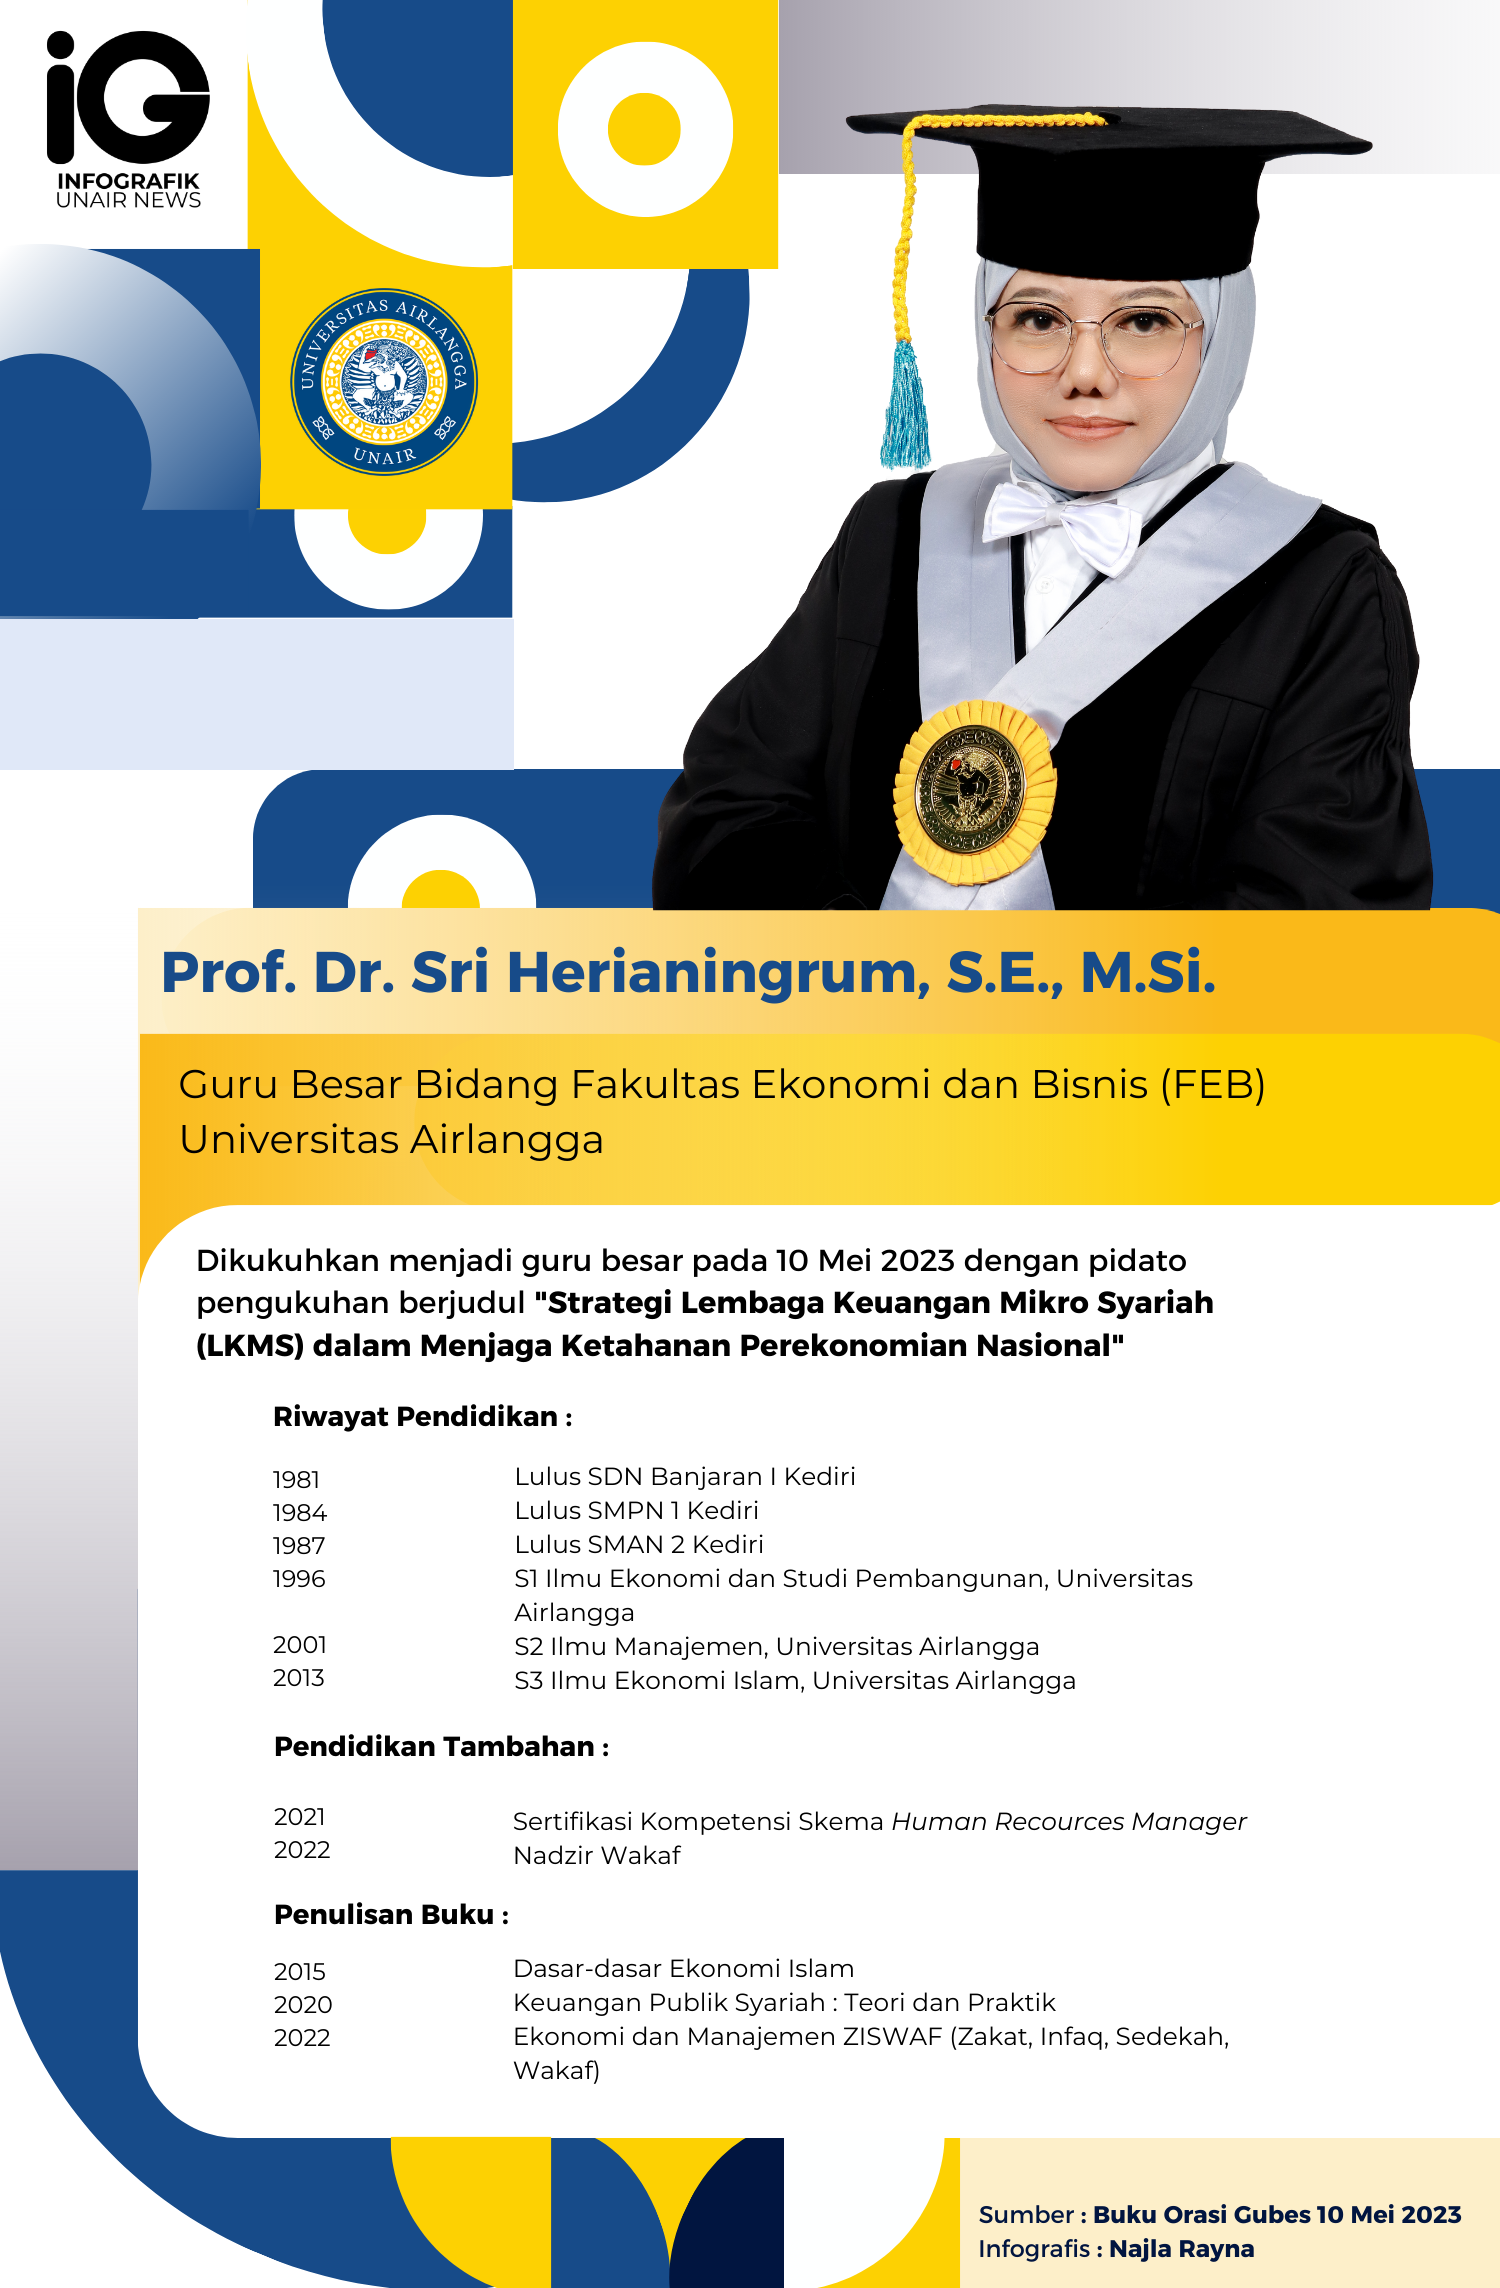 Infografik : Profil Guru Besar Prof. Dr. Sri Herianingrum, S.E., M.Si.